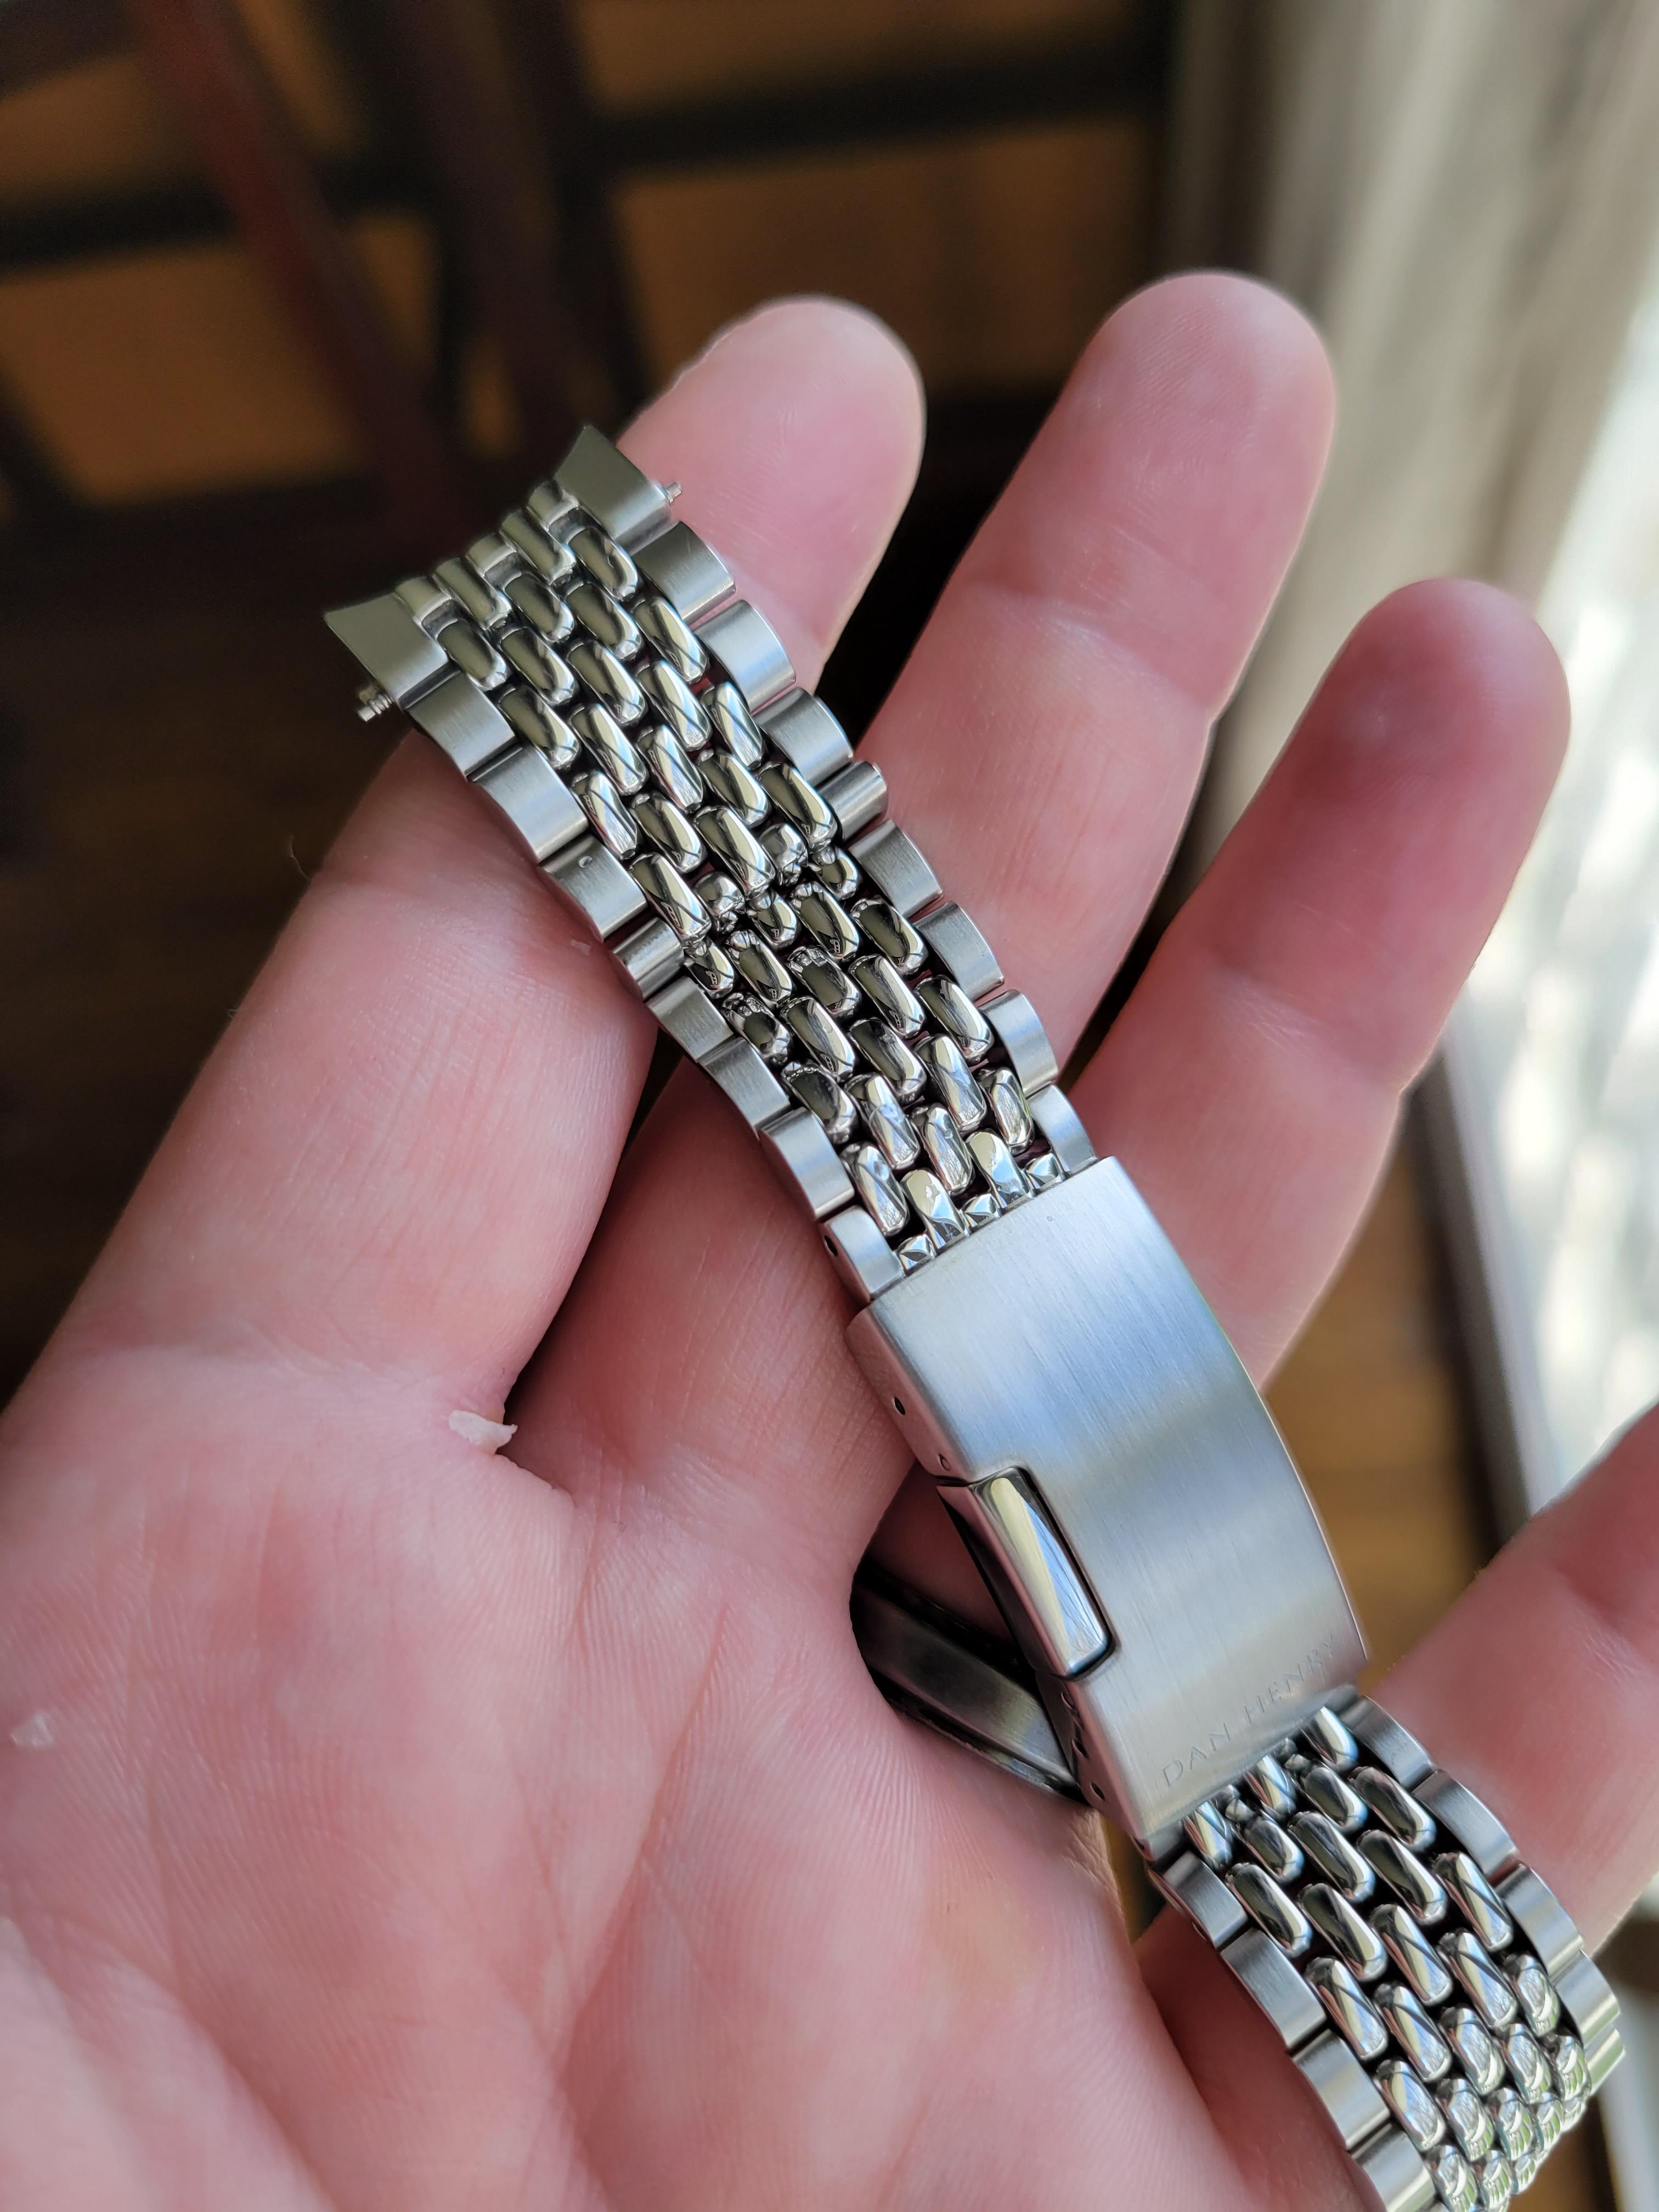 WTS] Dan Henry 19mm Beads of Rice Bracelet : r/Watchexchange